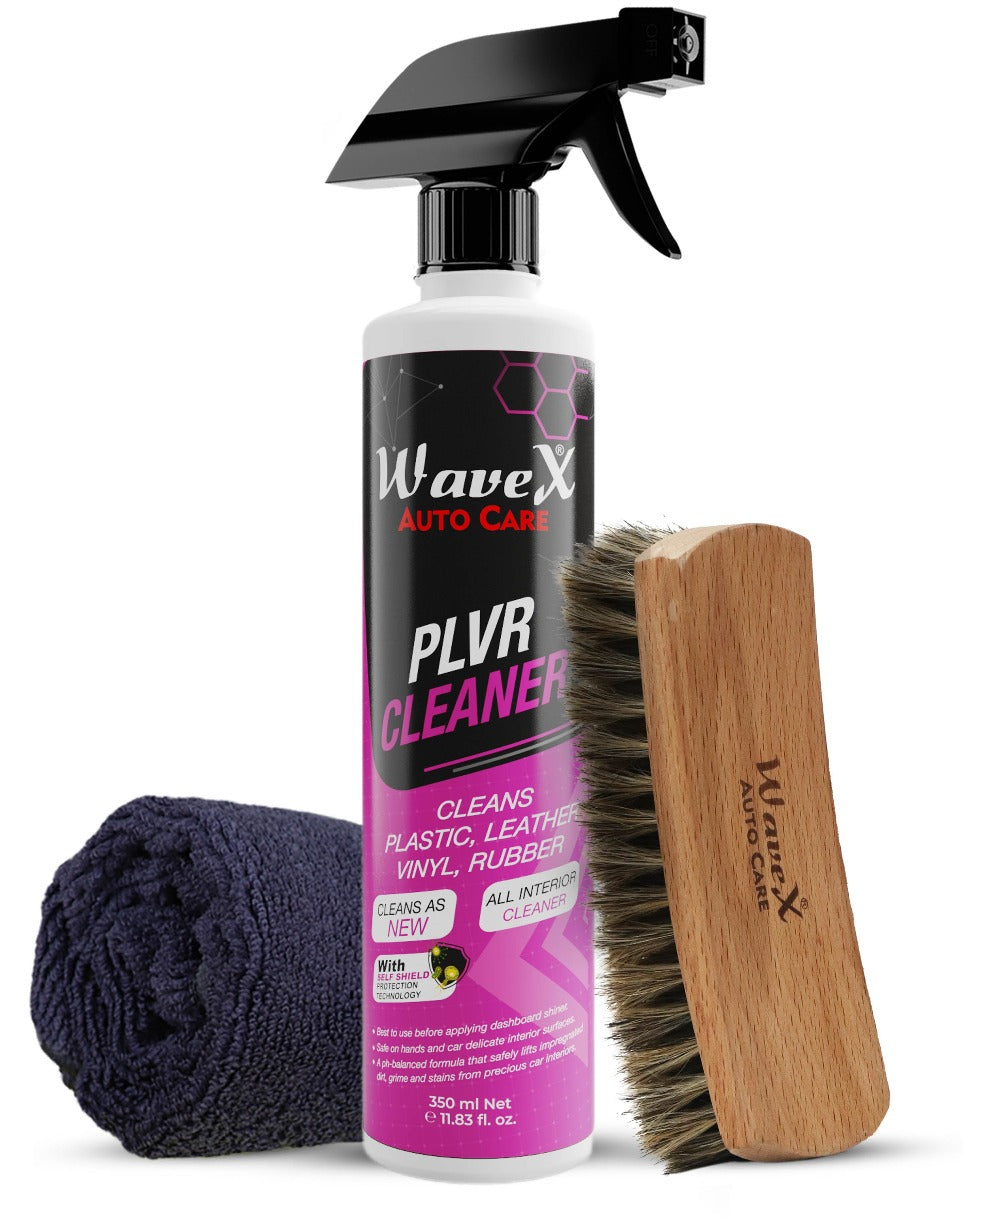 PLVR Car Interior Cleaner 350ml | Car Interior Cleaner | Cleaning Brush+Cloth